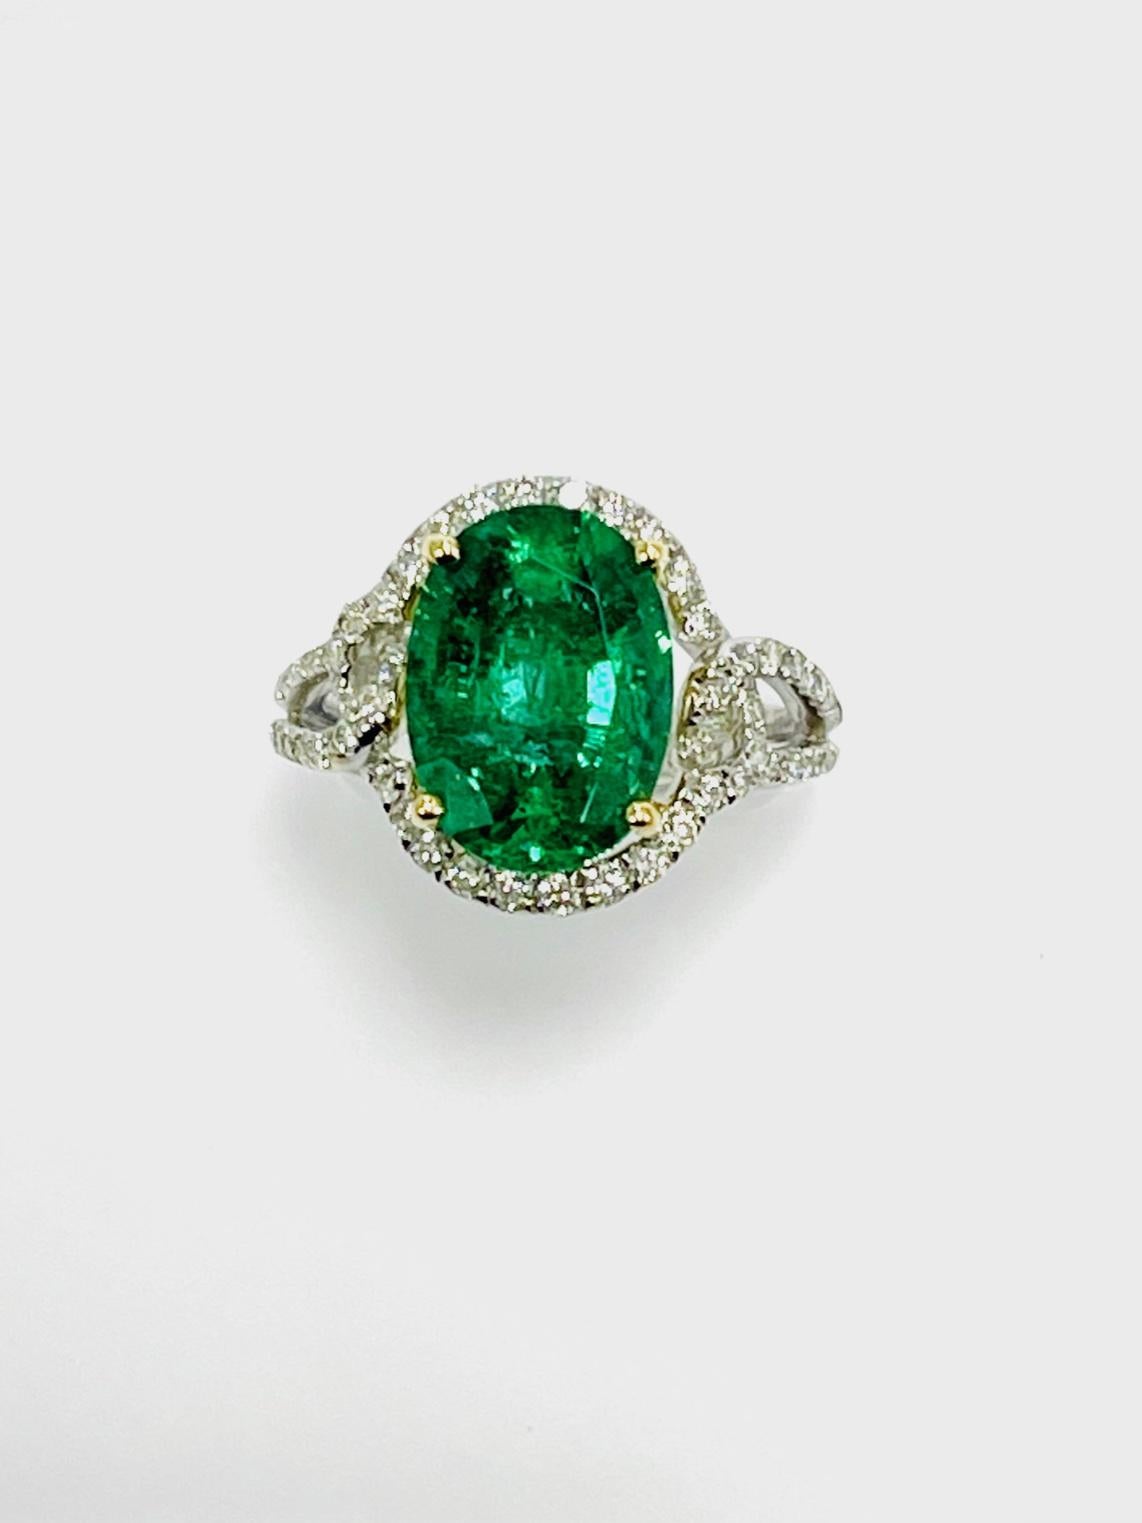 4.73 Carat oval shape Zambian emerald set in 18k white gold ring 0.54 carat Diamonds .